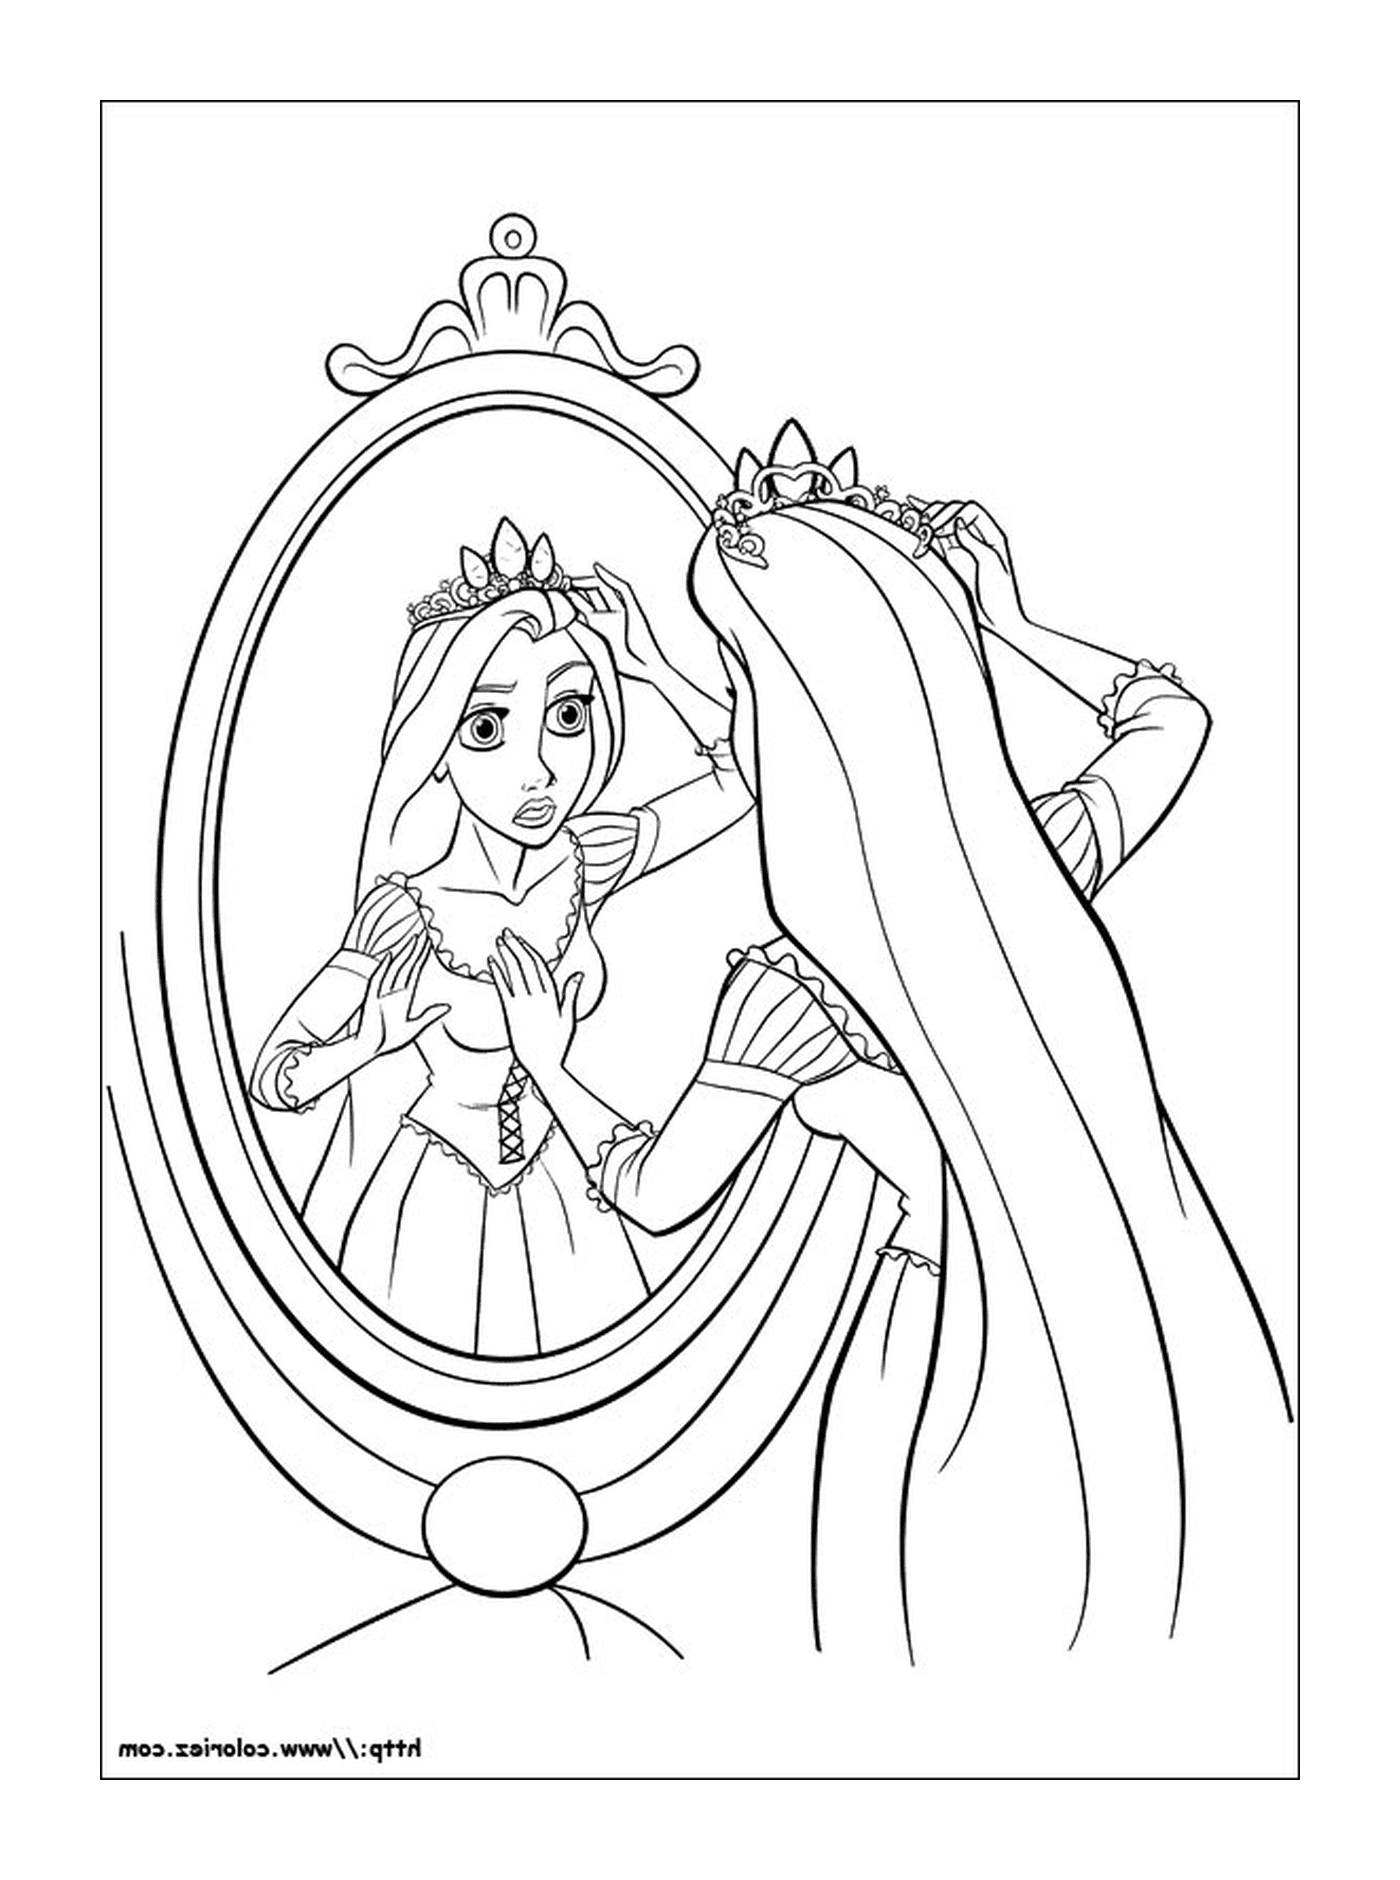  Princesa Raiponce, coroa majestosa 